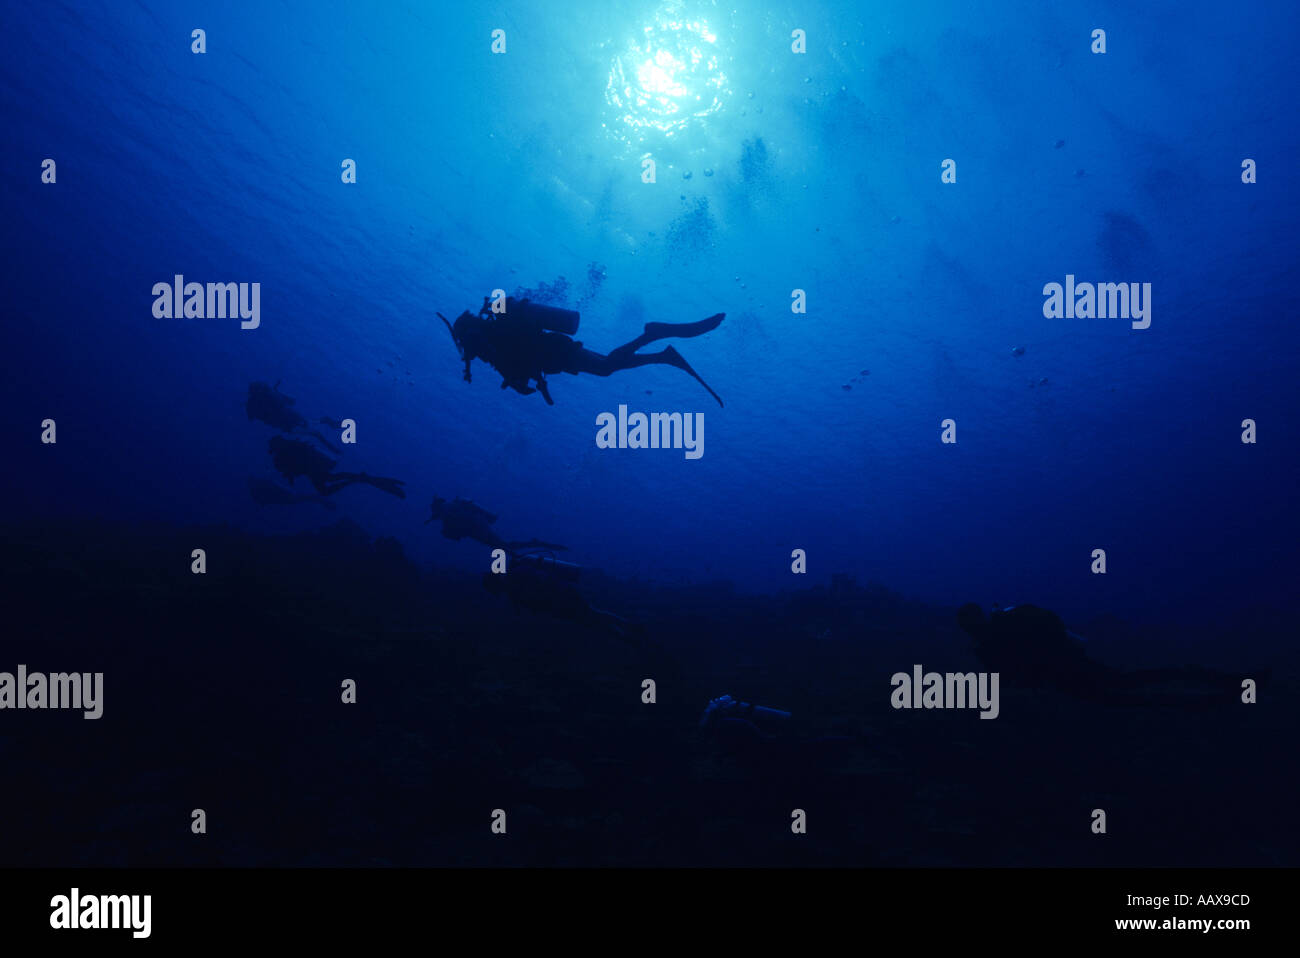 Divers swimming alone edge of dropoff Stock Photo